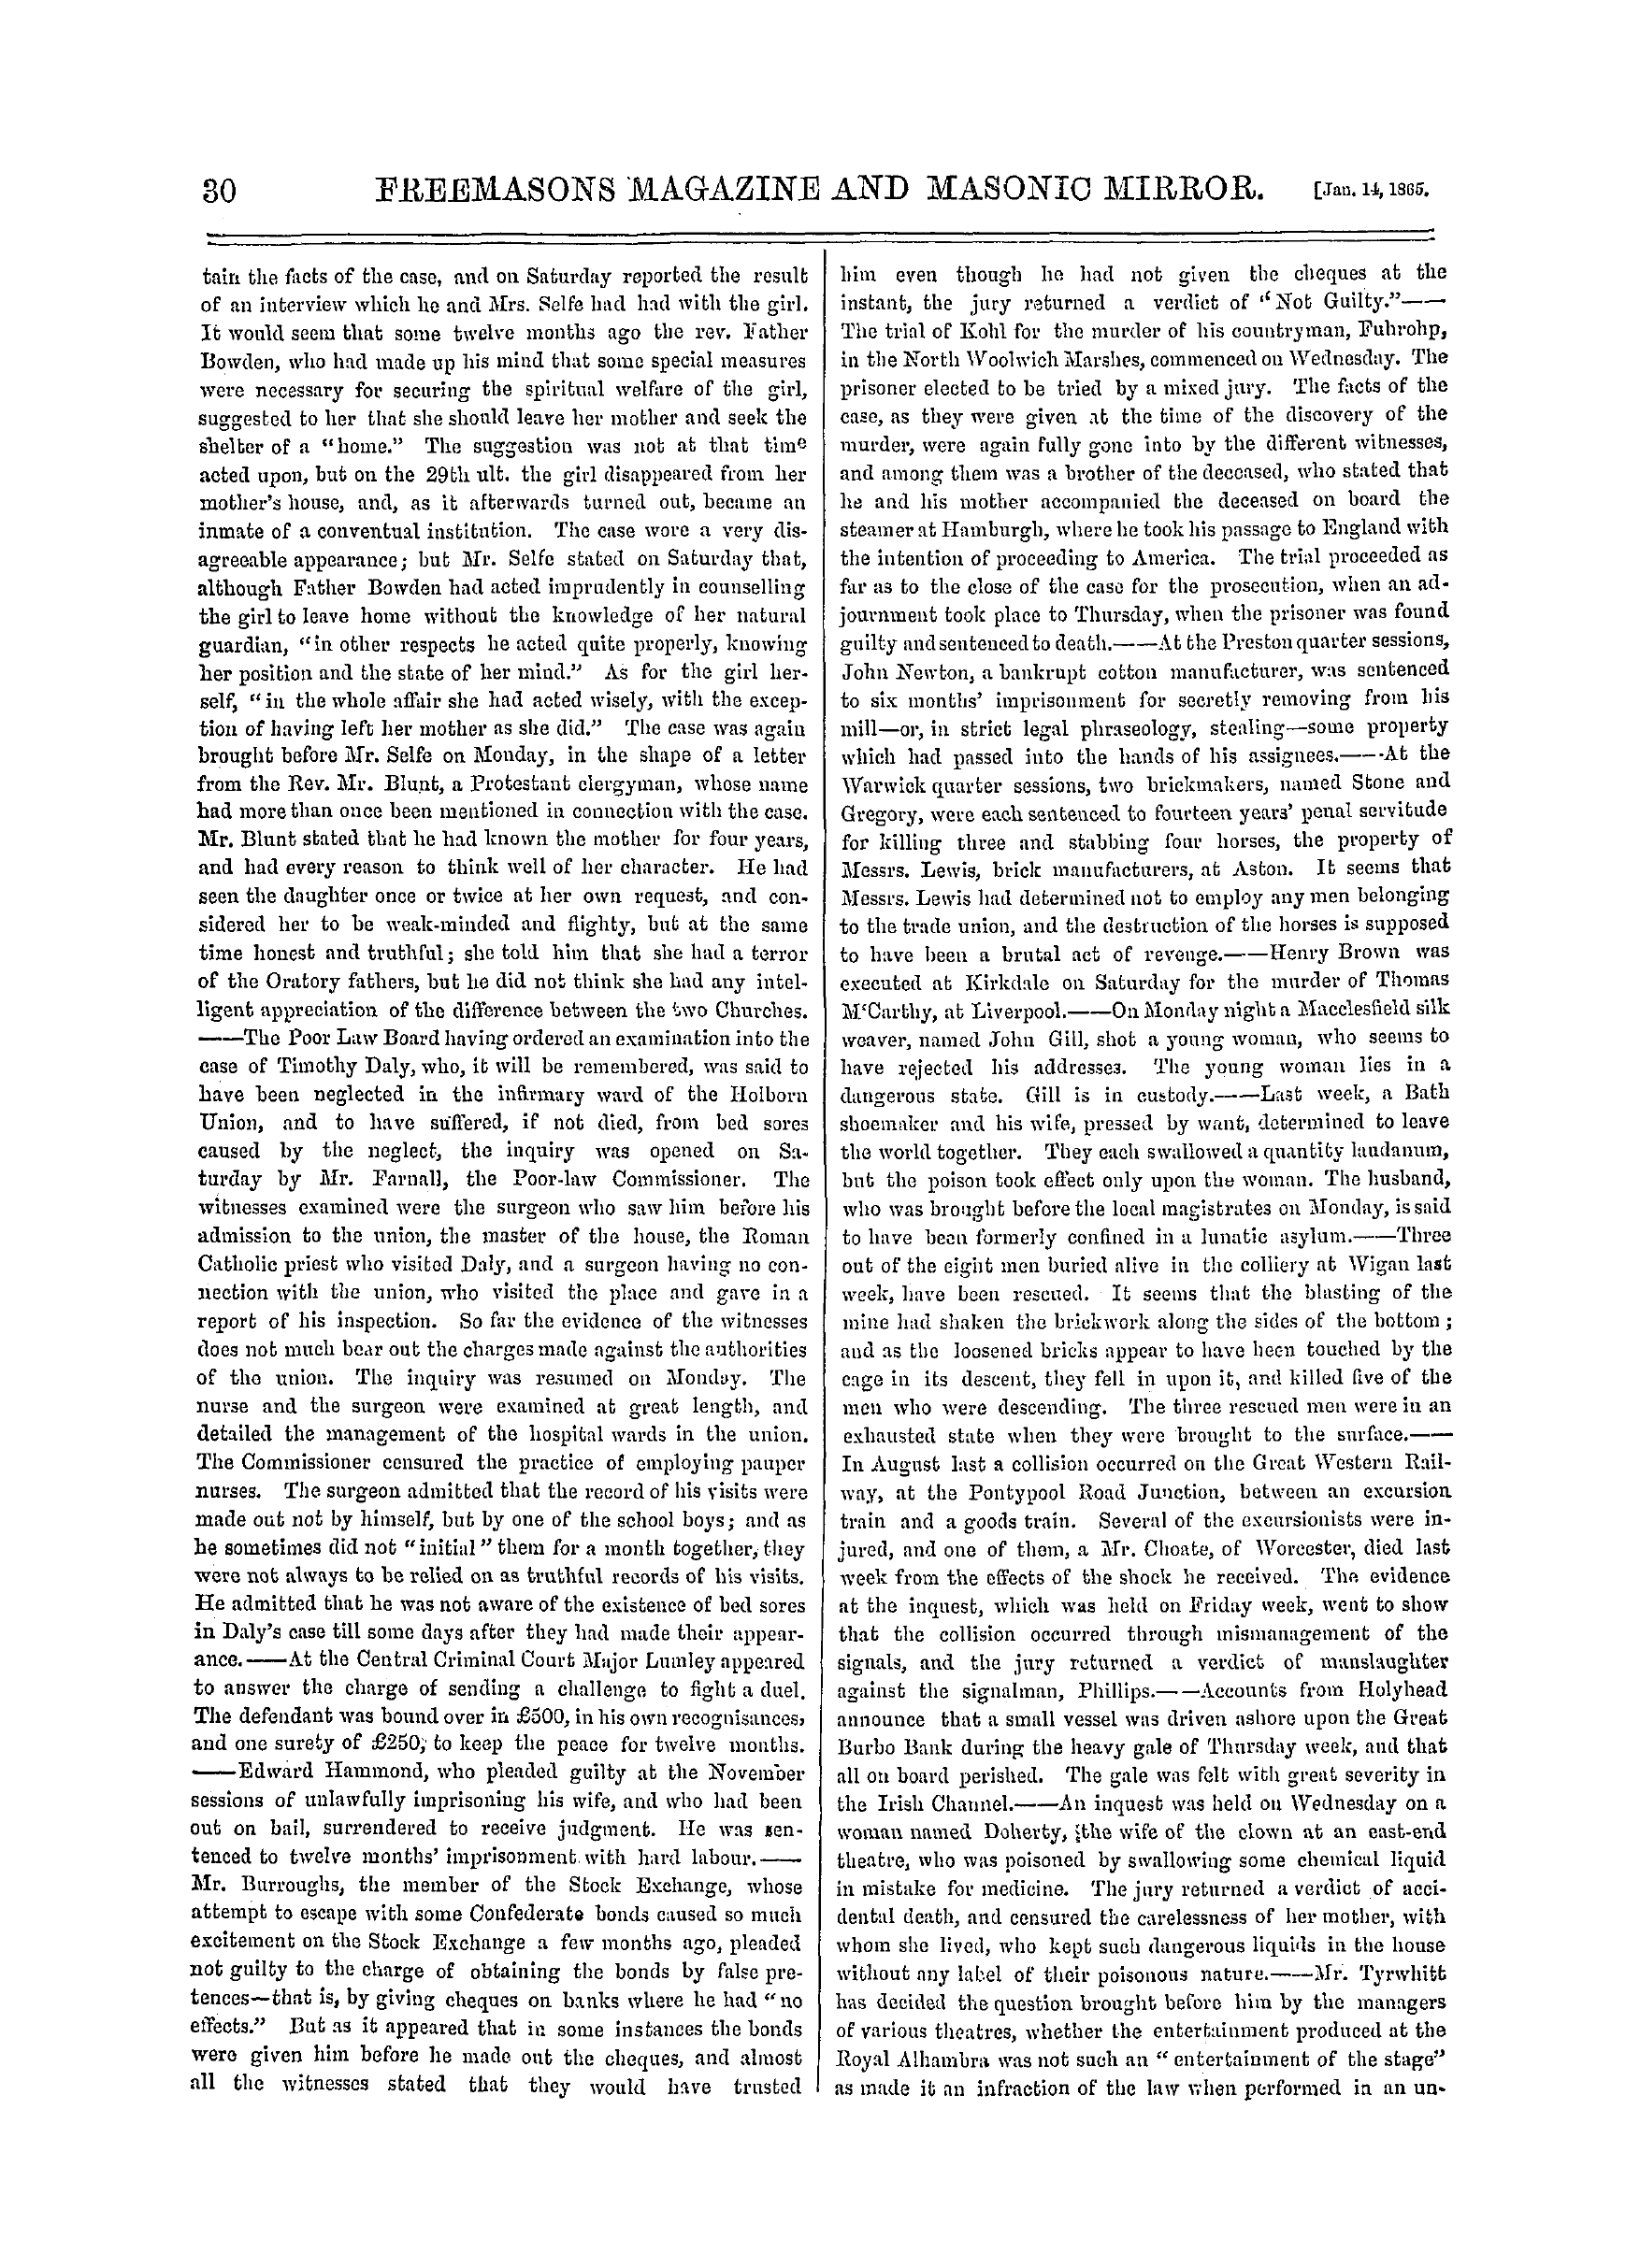 The Freemasons' Monthly Magazine: 1865-01-14 - The Week.